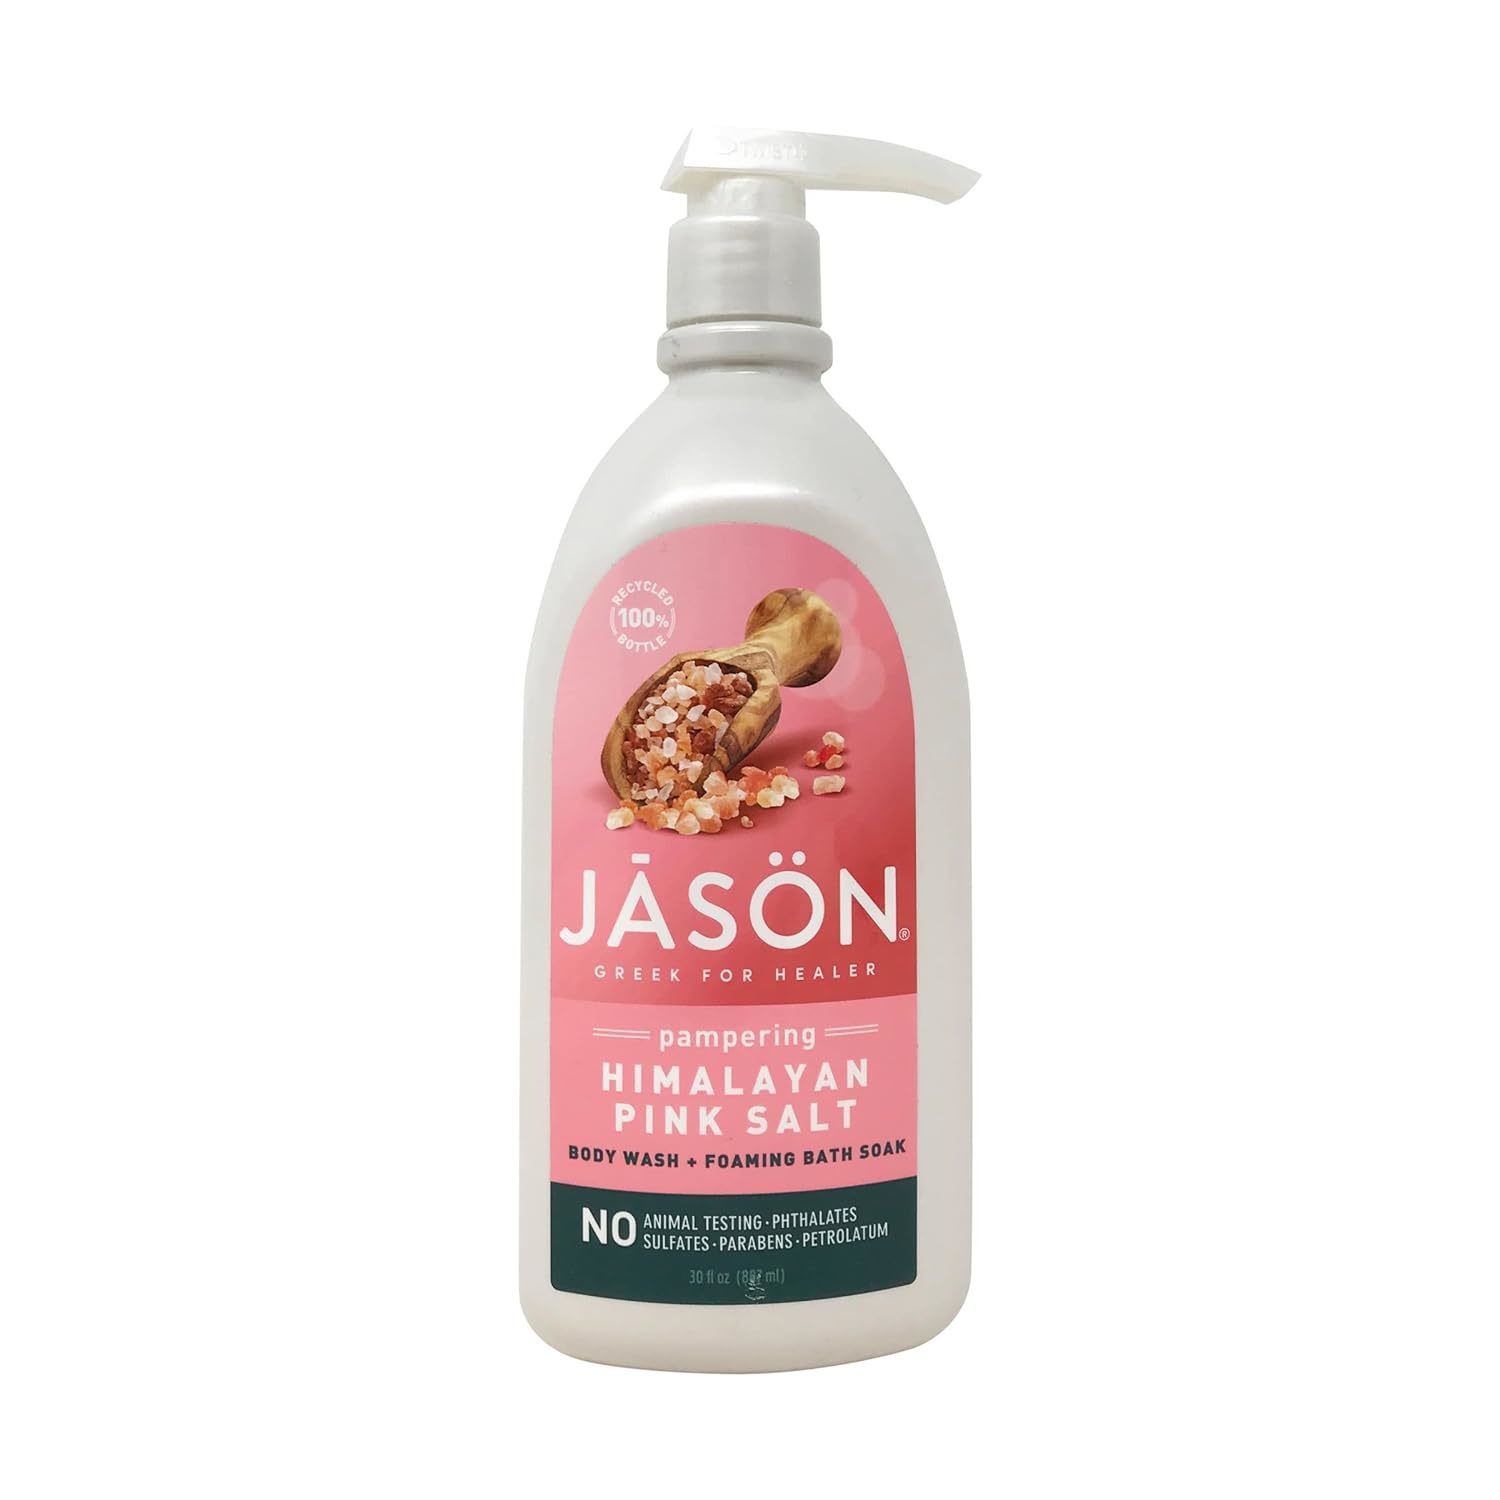 Jason Pampering Himalayan Pink Salt 2 in 1 Foaming Bath Soak & Body Wash 30 fl o - $30.99